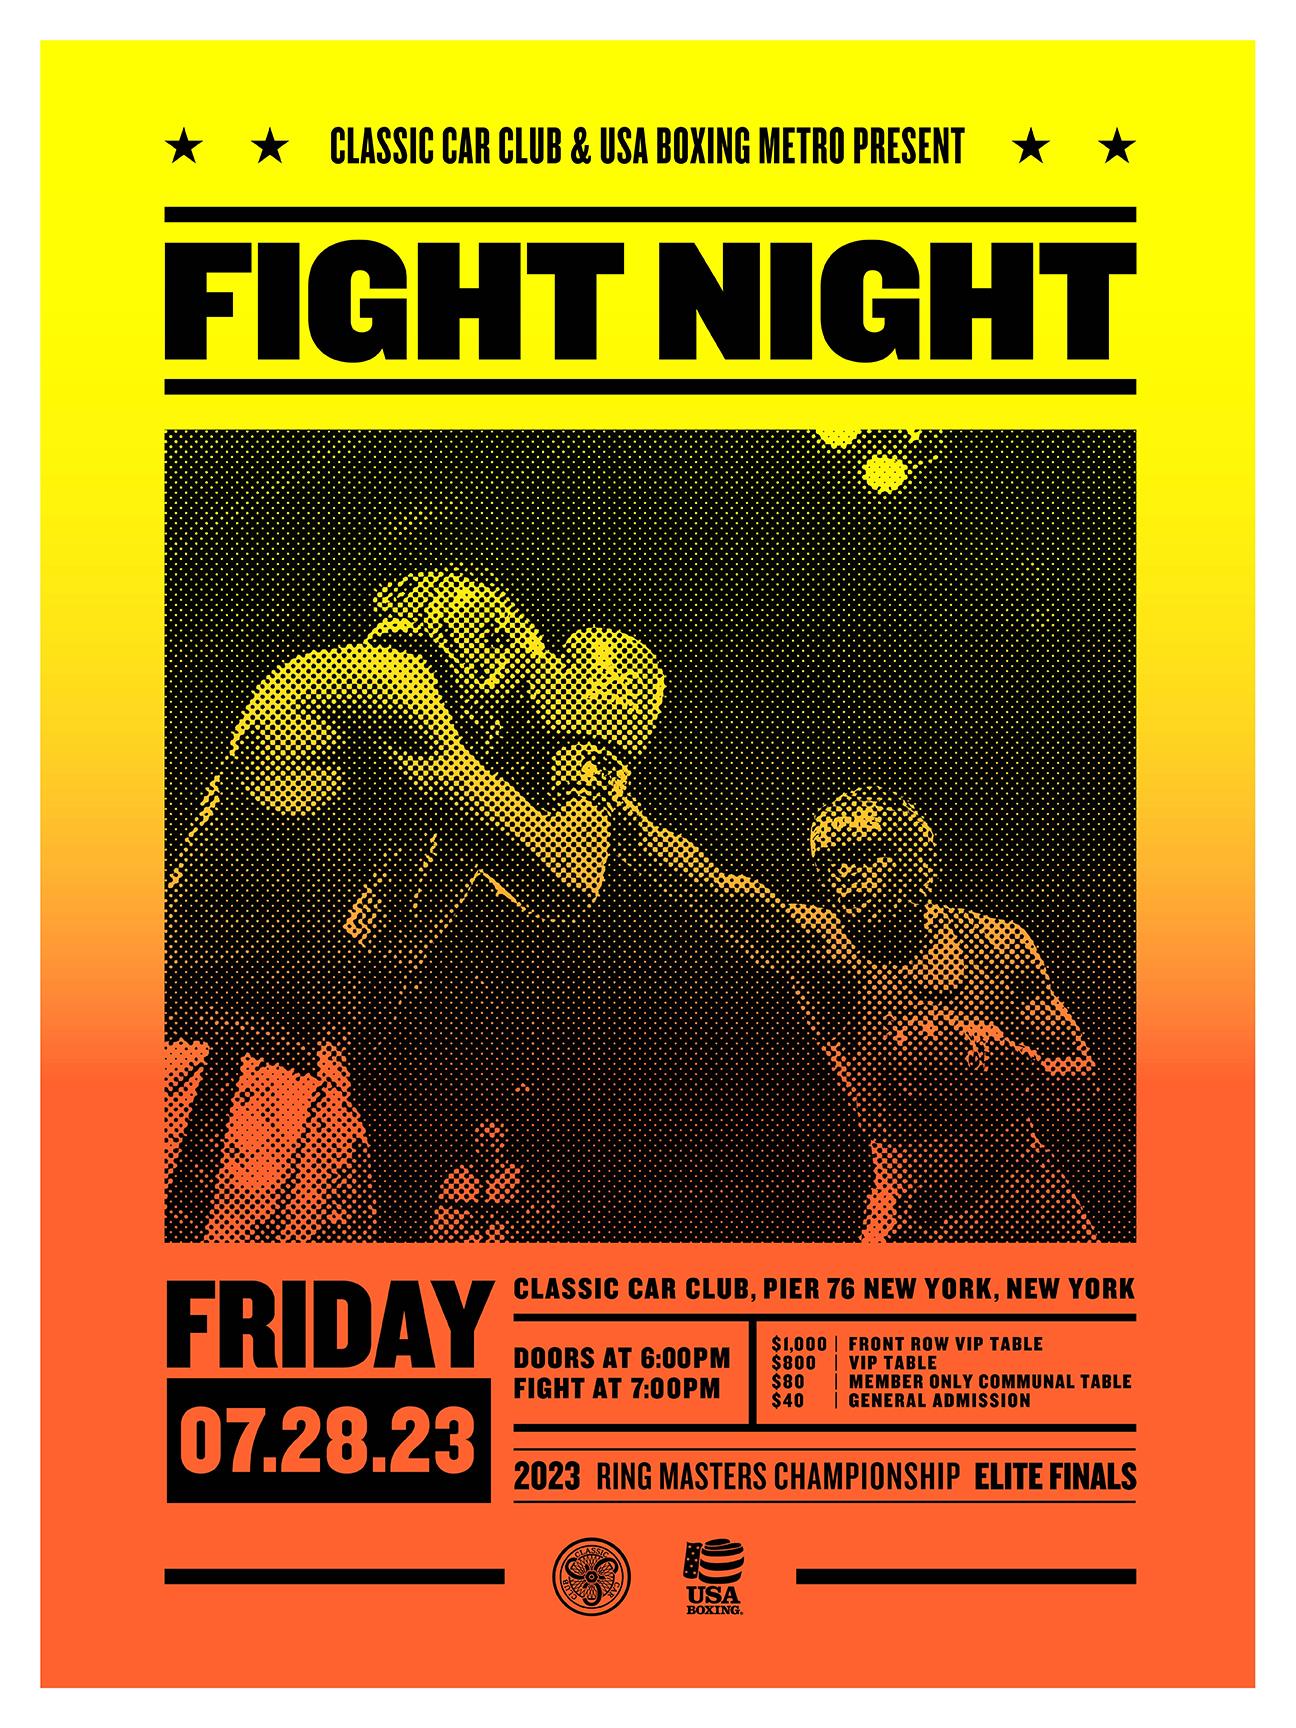 Fight Night @ CCC: Elite Finals